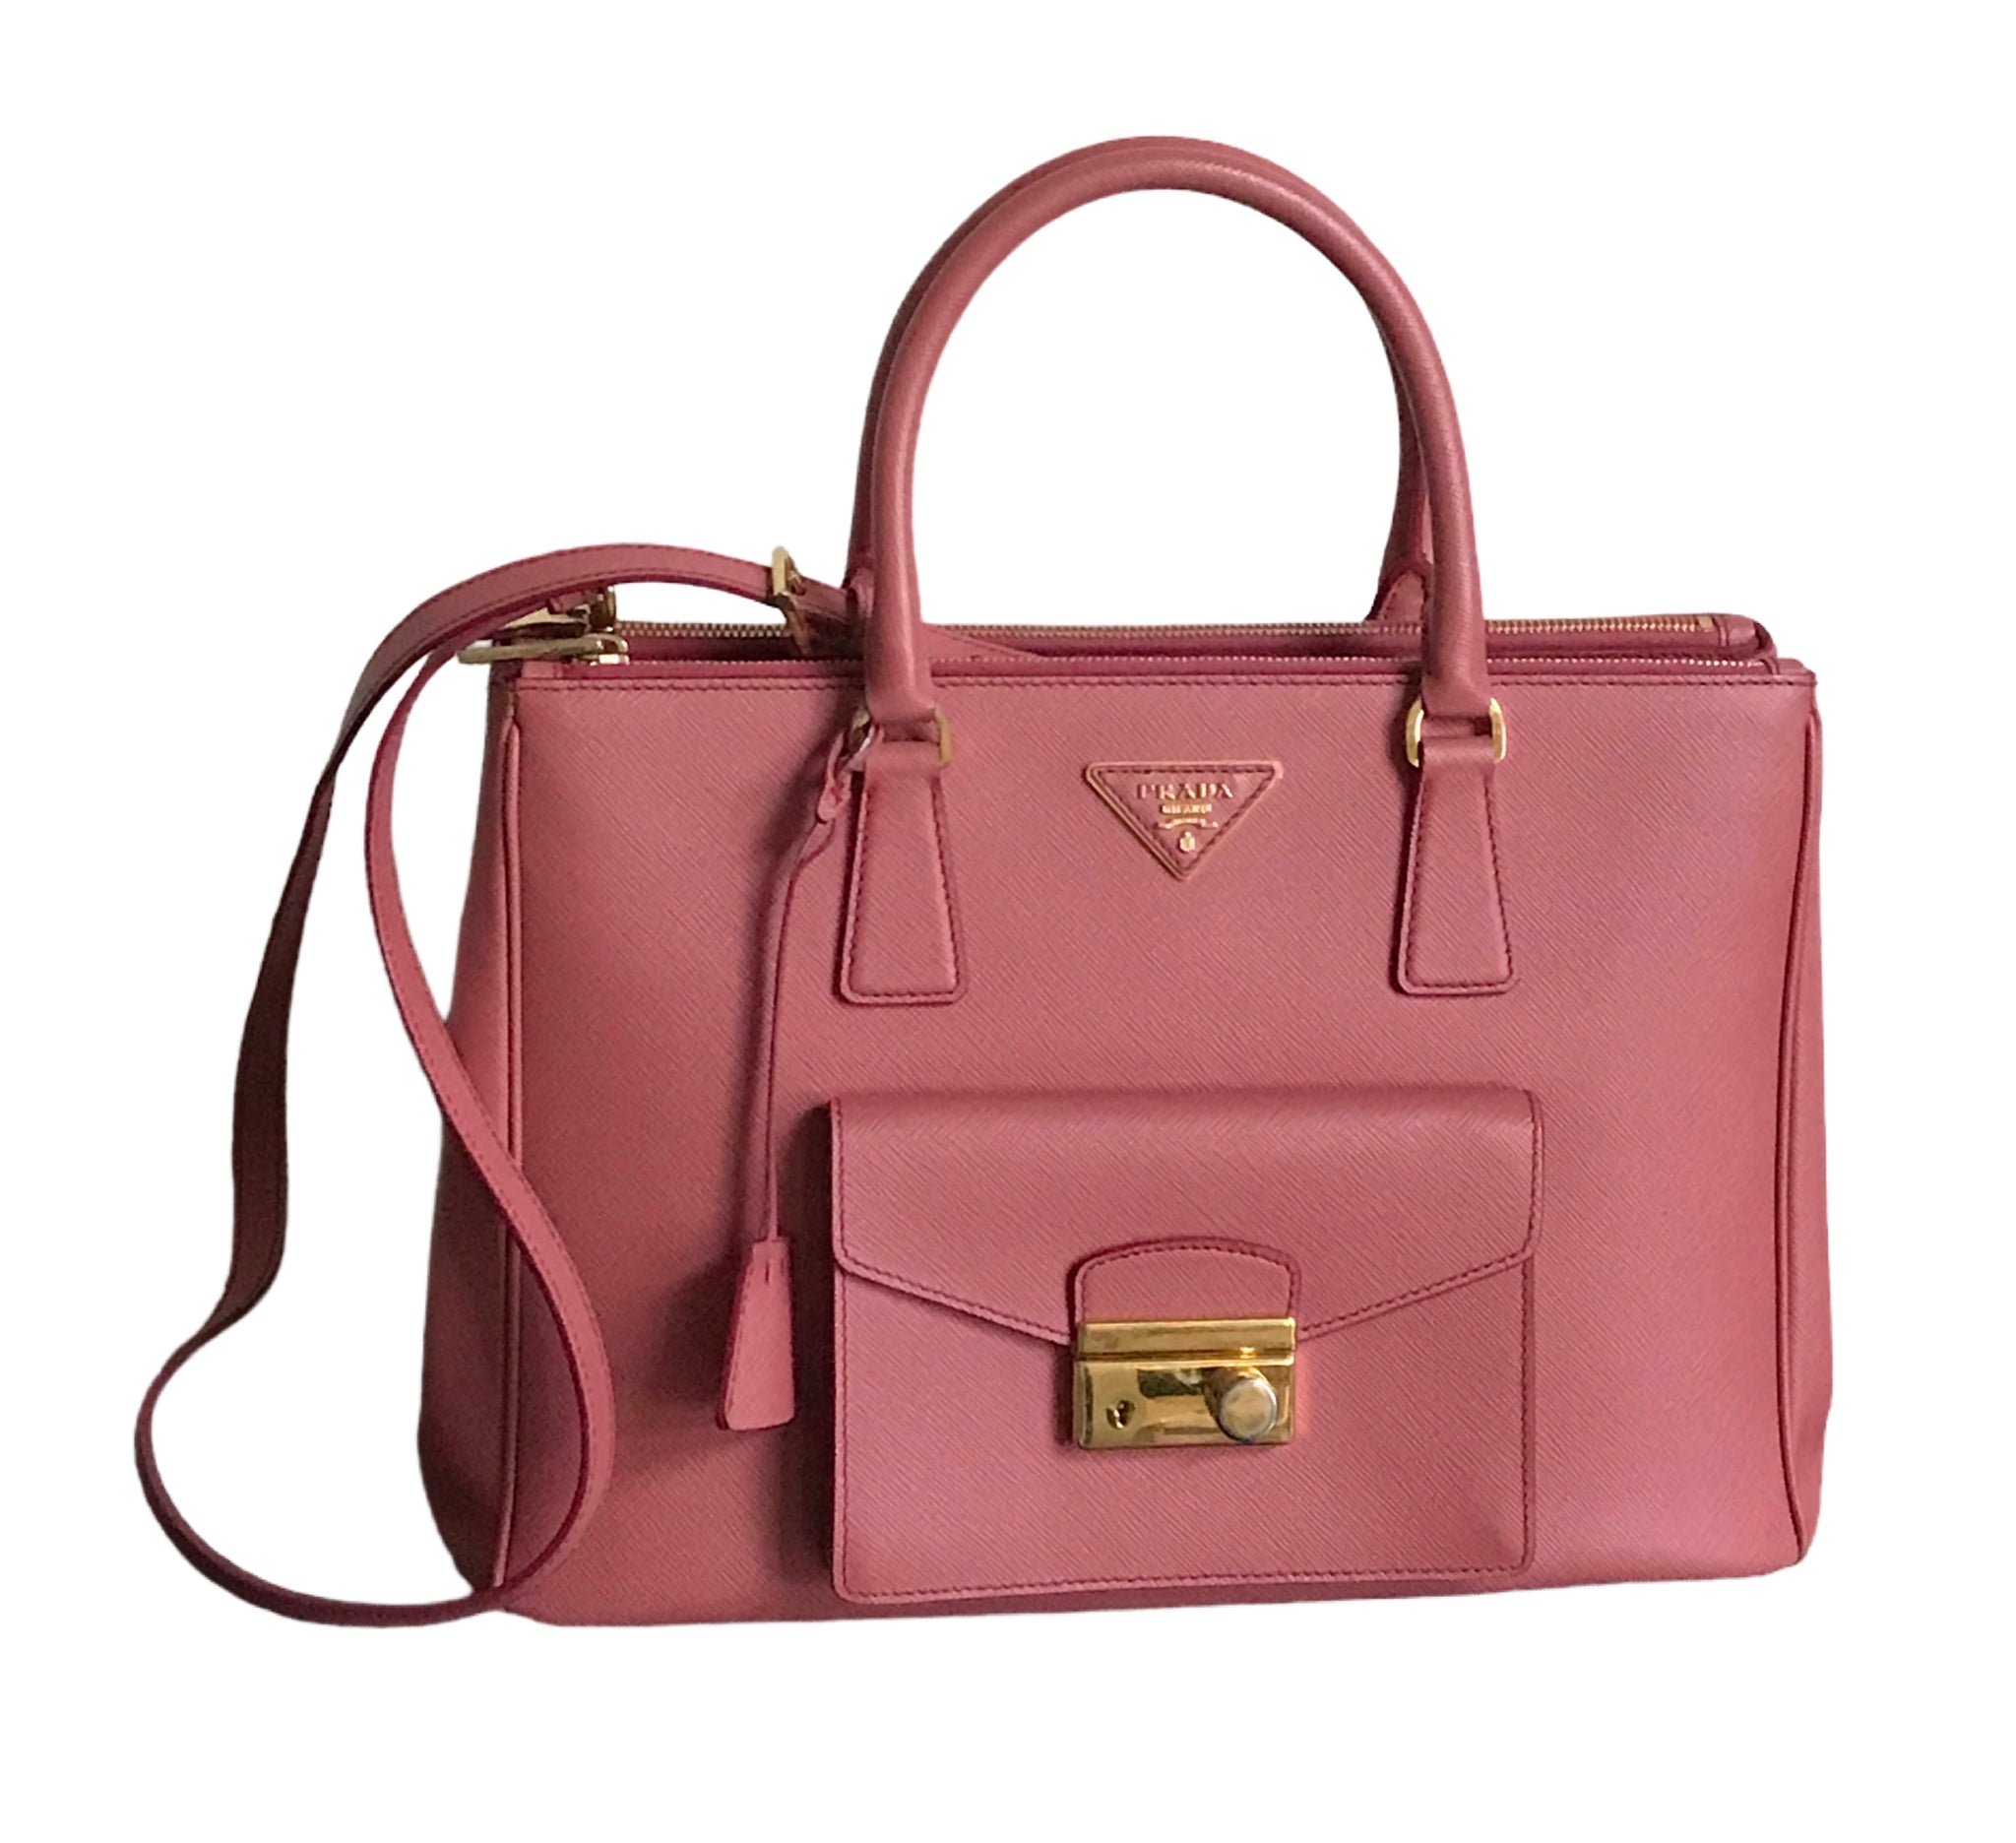 PRADA Lux Saffiano Leather Tote Tote Bag Light Pink